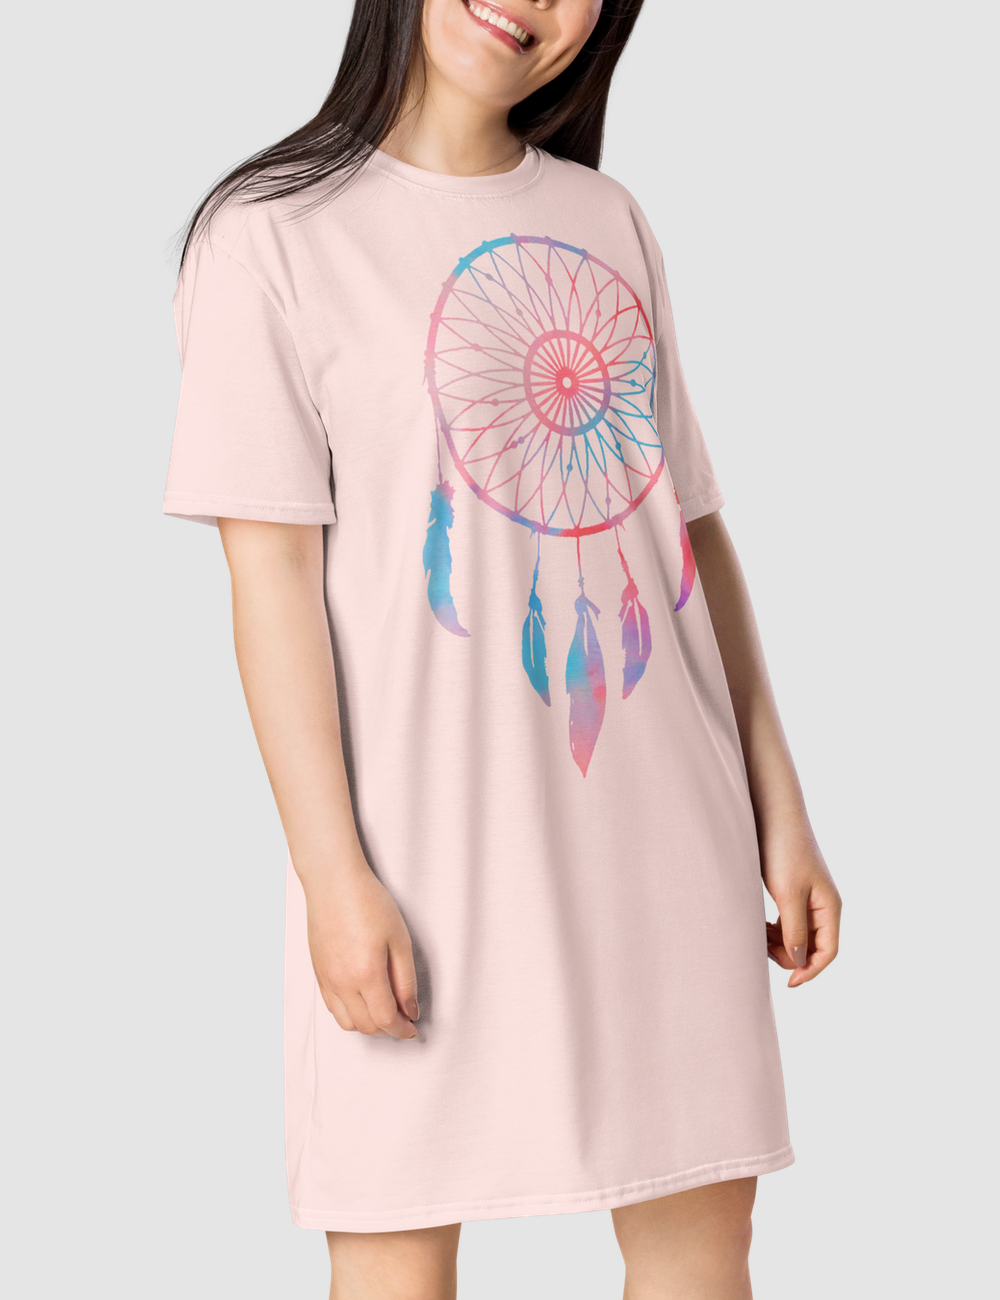 Misty Rose Multicolored Dreamcatcher T-Shirt Dress OniTakai